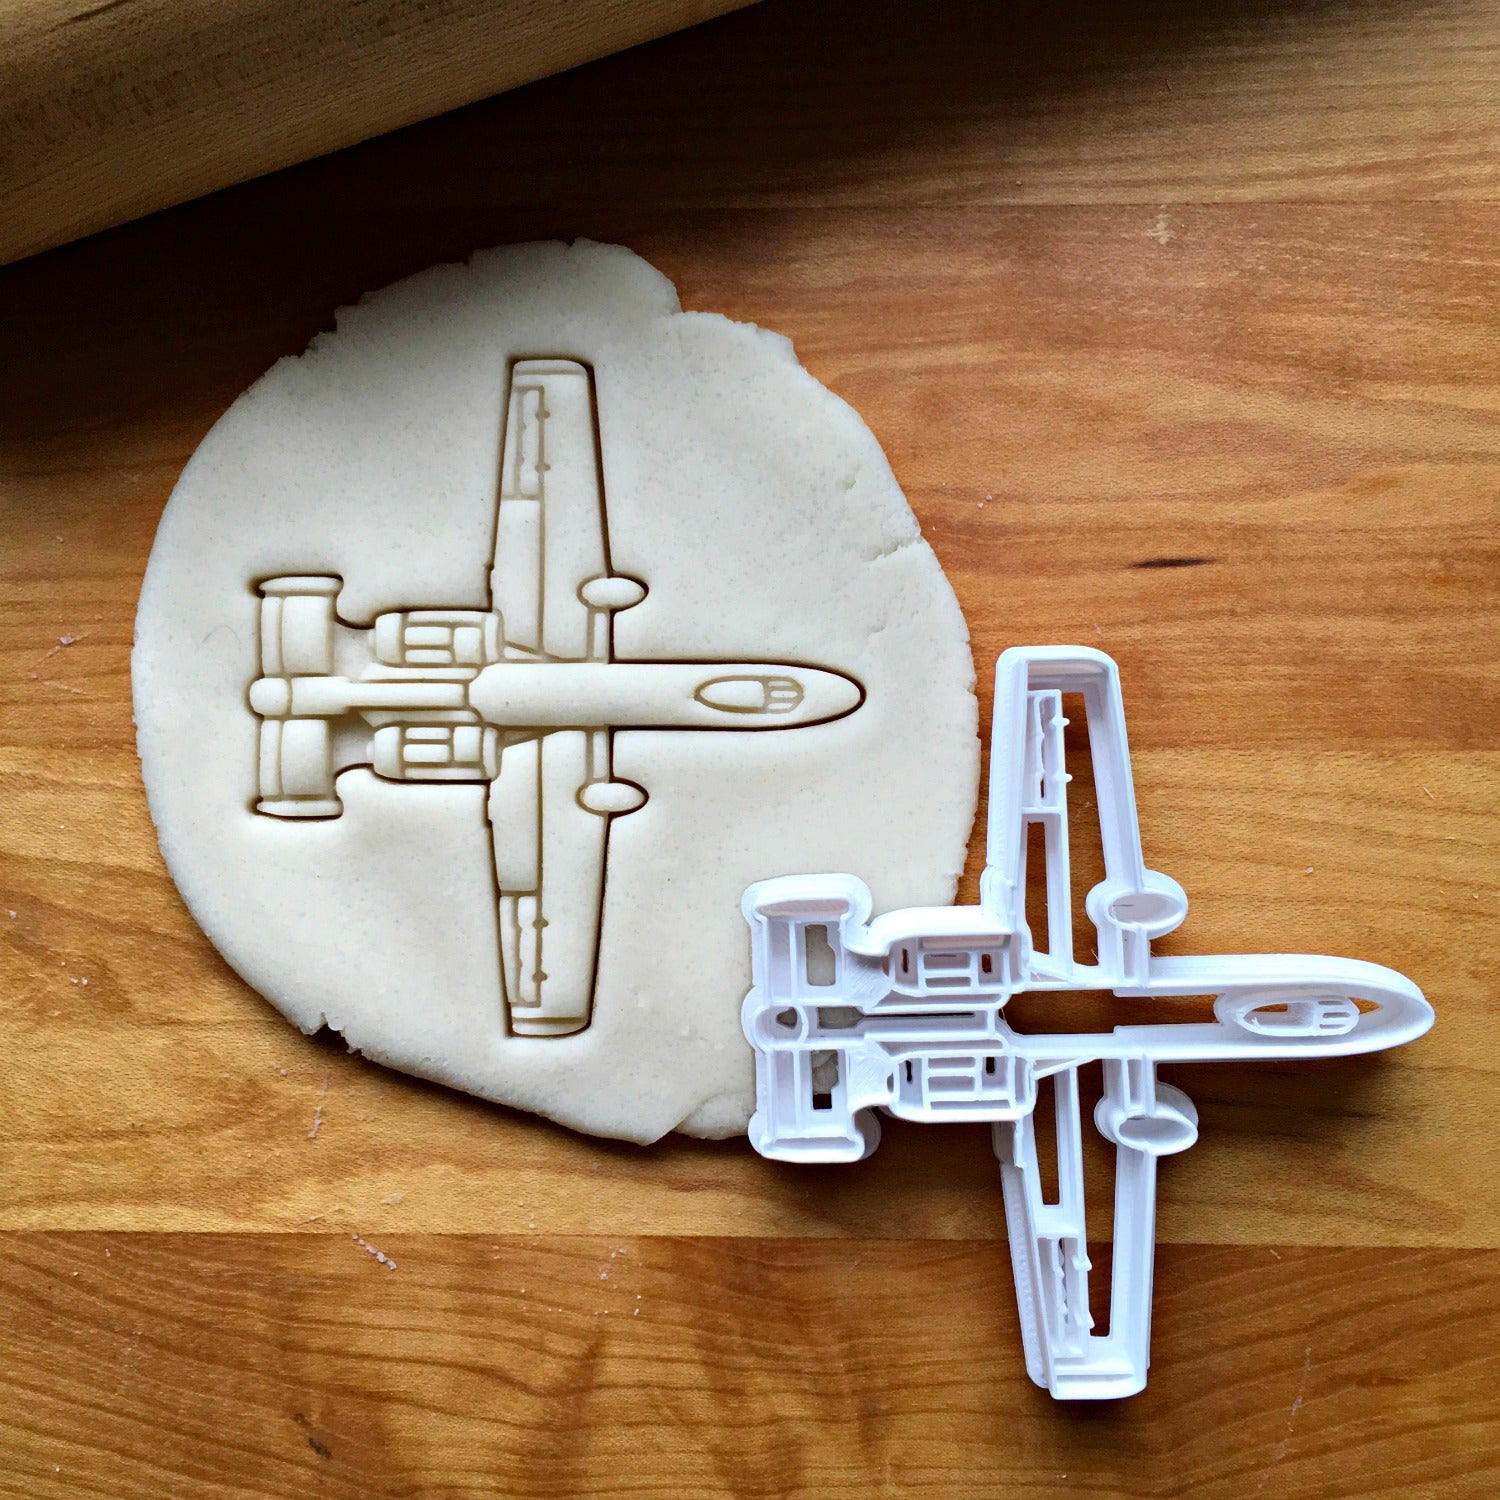 Attack Jet Fighter Cookie Cutter/Multi-Size/Dishwasher Safe - Sweet Prints Inc.